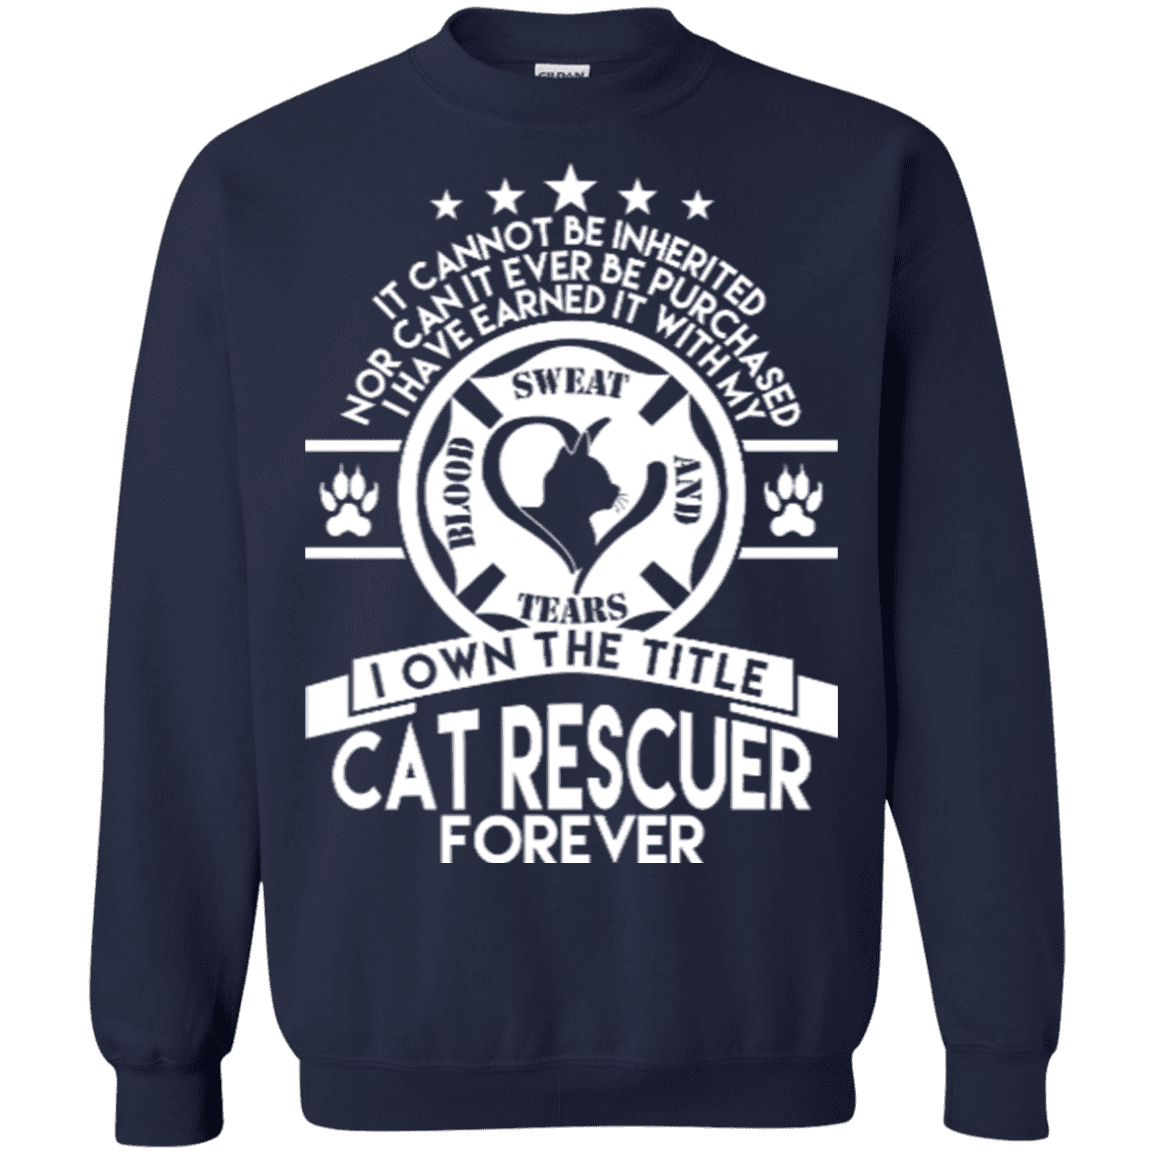 Cat Rescuer Forever - Sweatshirt.